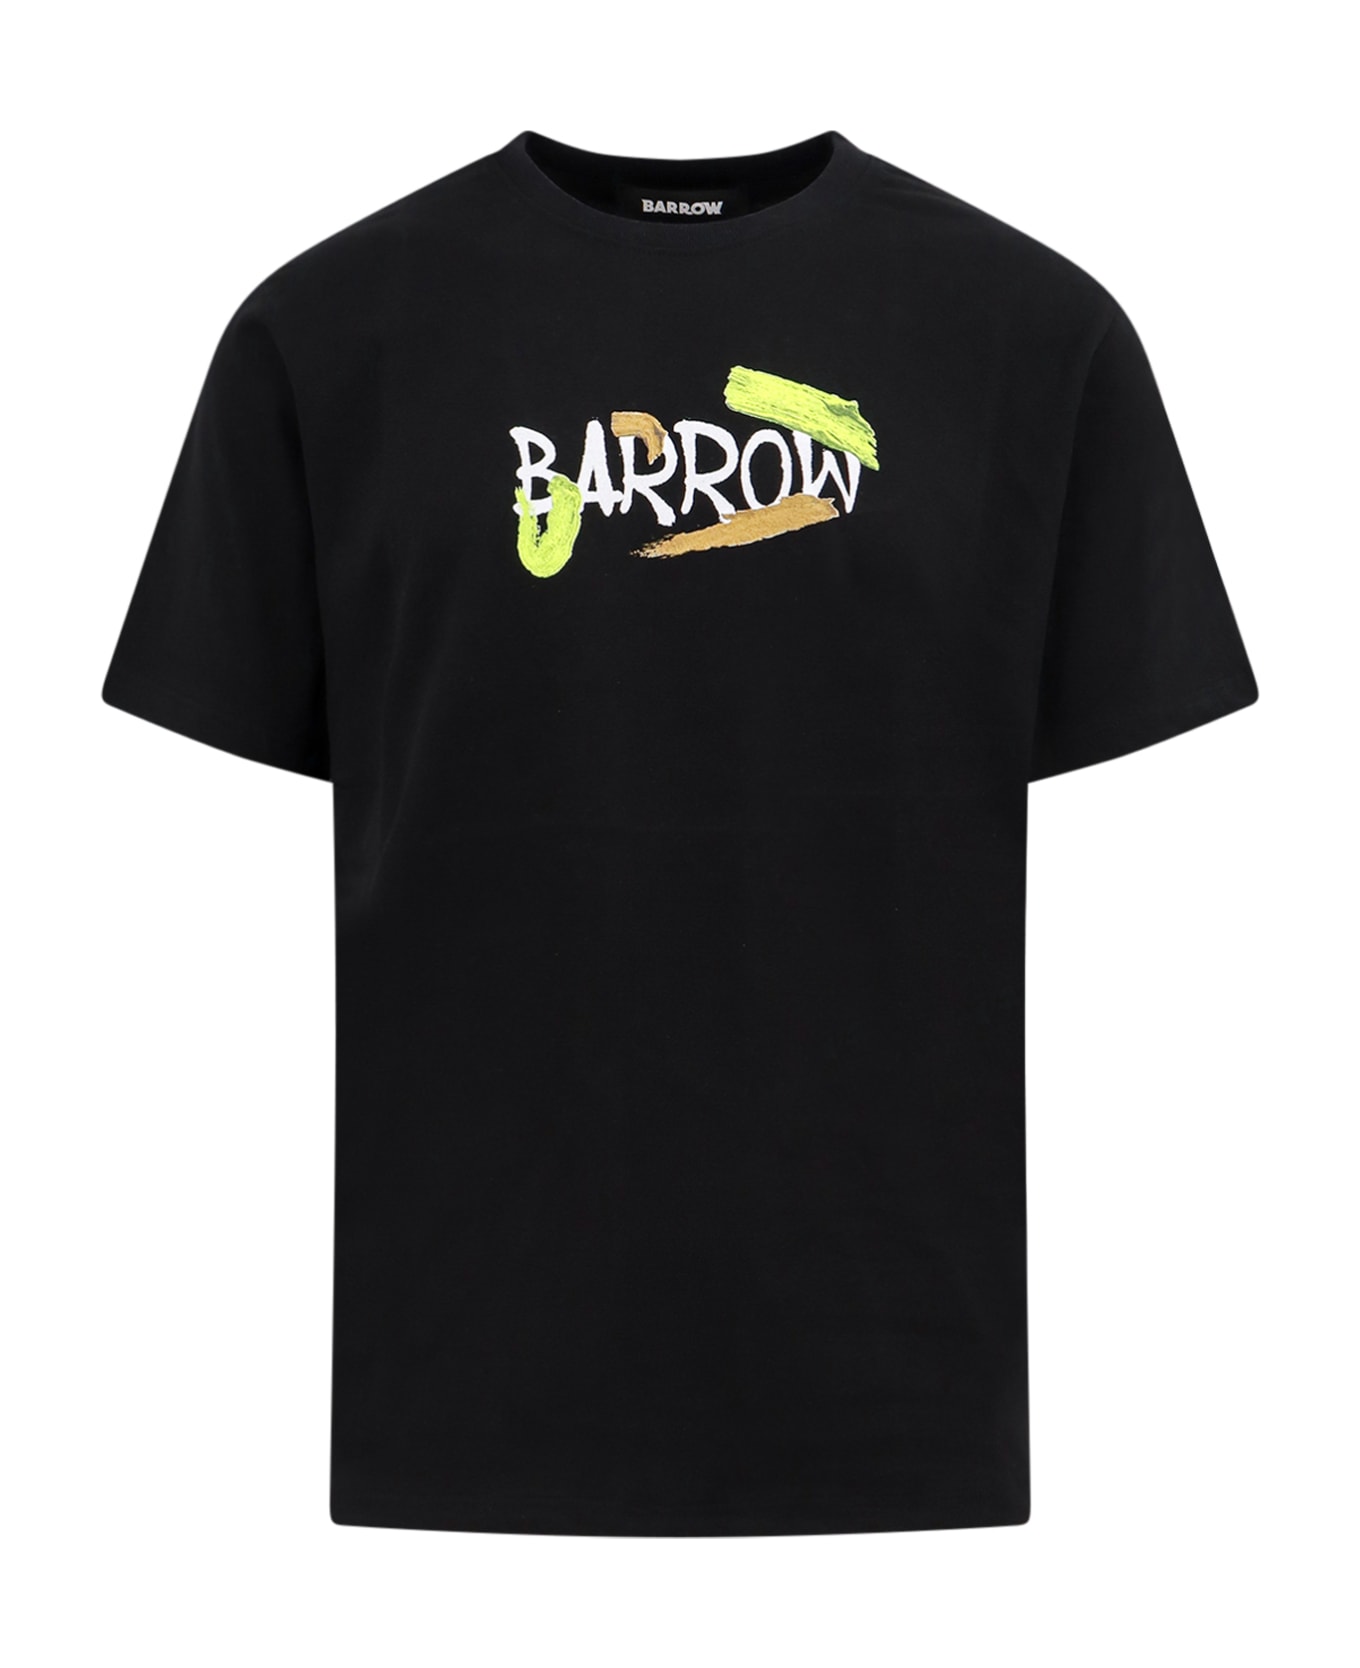 Barrow T-shirt - Black シャツ